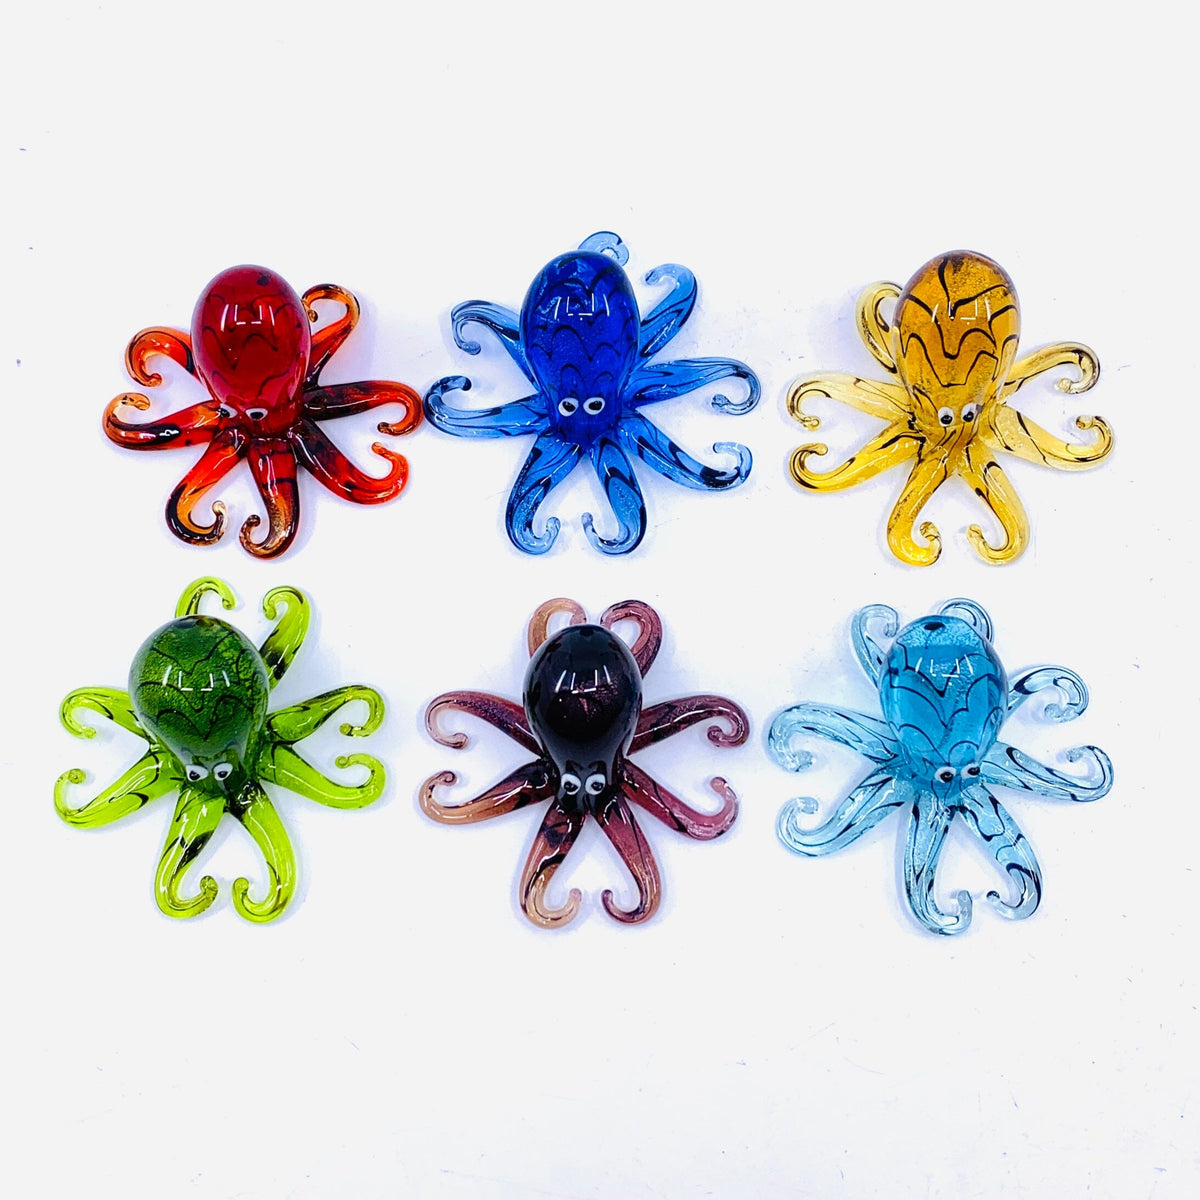 Glass Octopus, Red Miniature Chesapeake Bay 